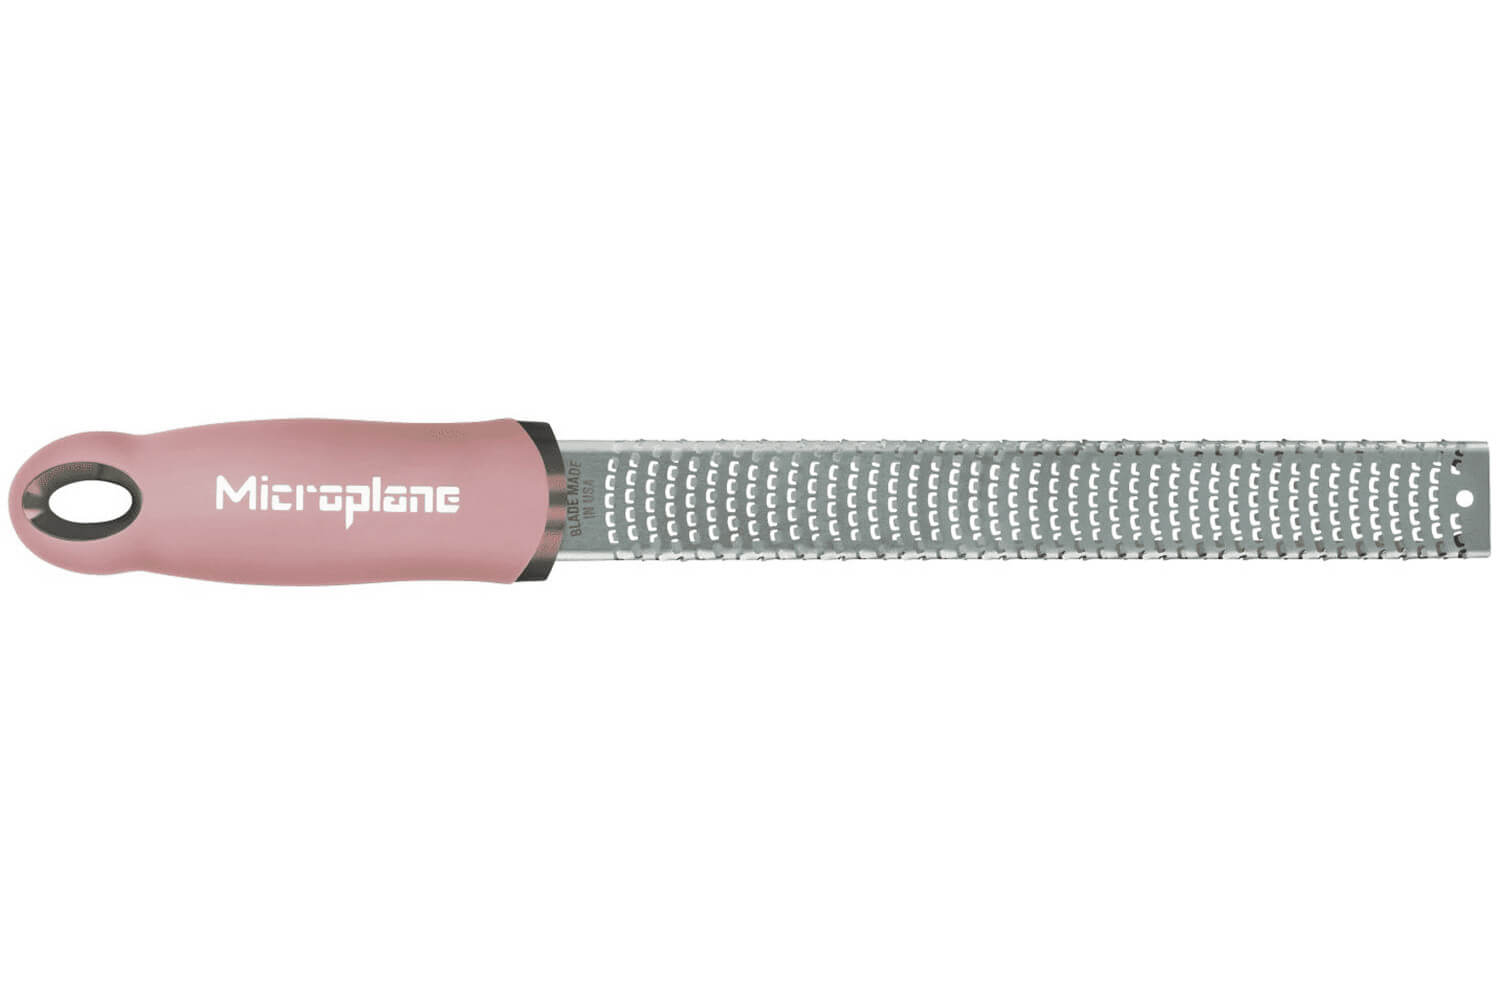 Râpe microplane® classique néon pink 52420